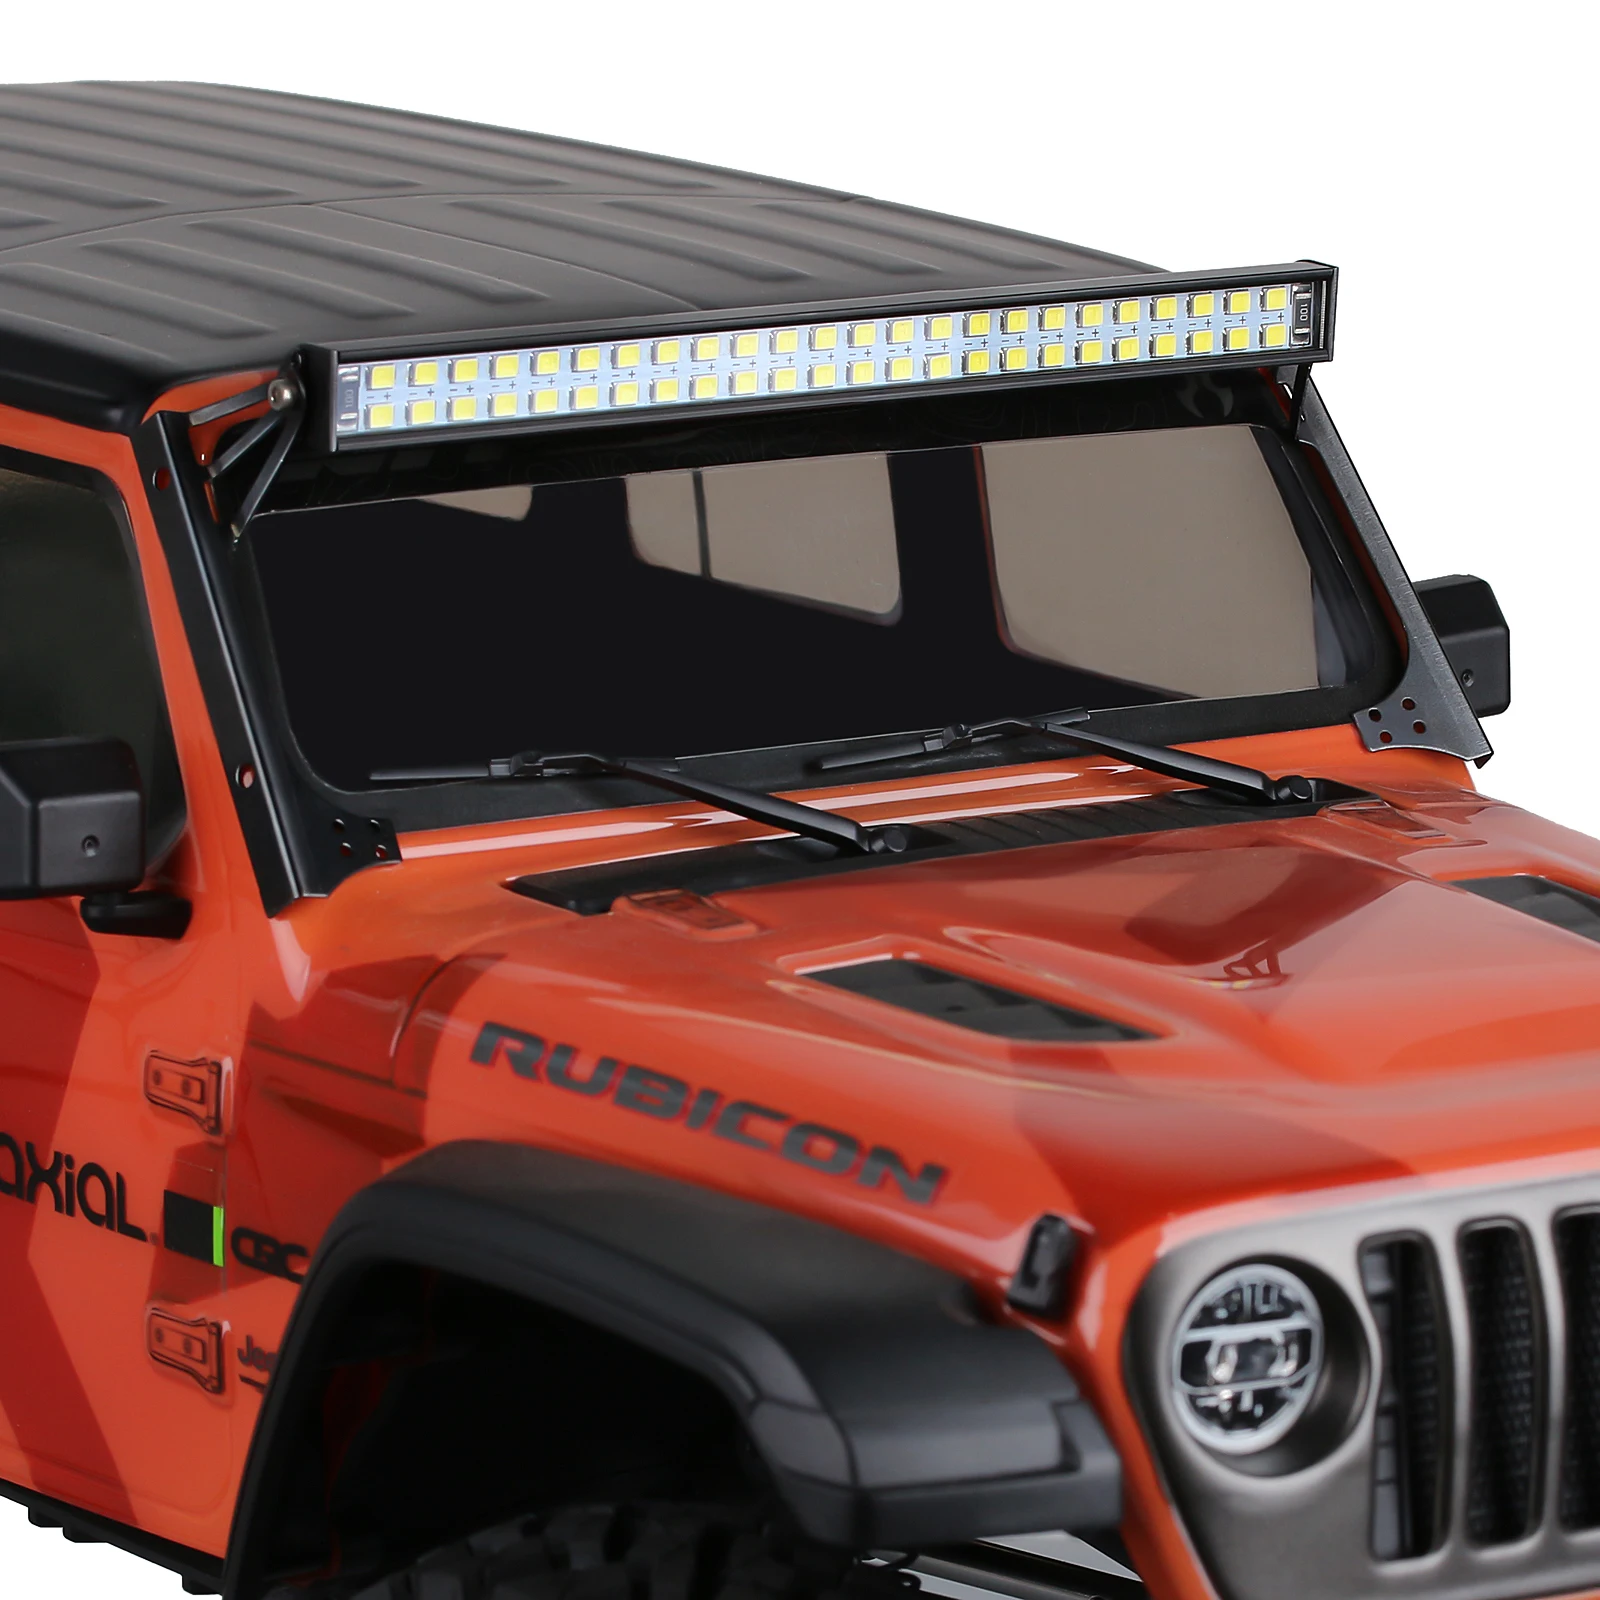 1PCS LED Light&Control Panel 48LED Bar for 1/10 RC Crawler Axial 90046 SCX10 III AXI03007 Jeep Wrangler Body Shell